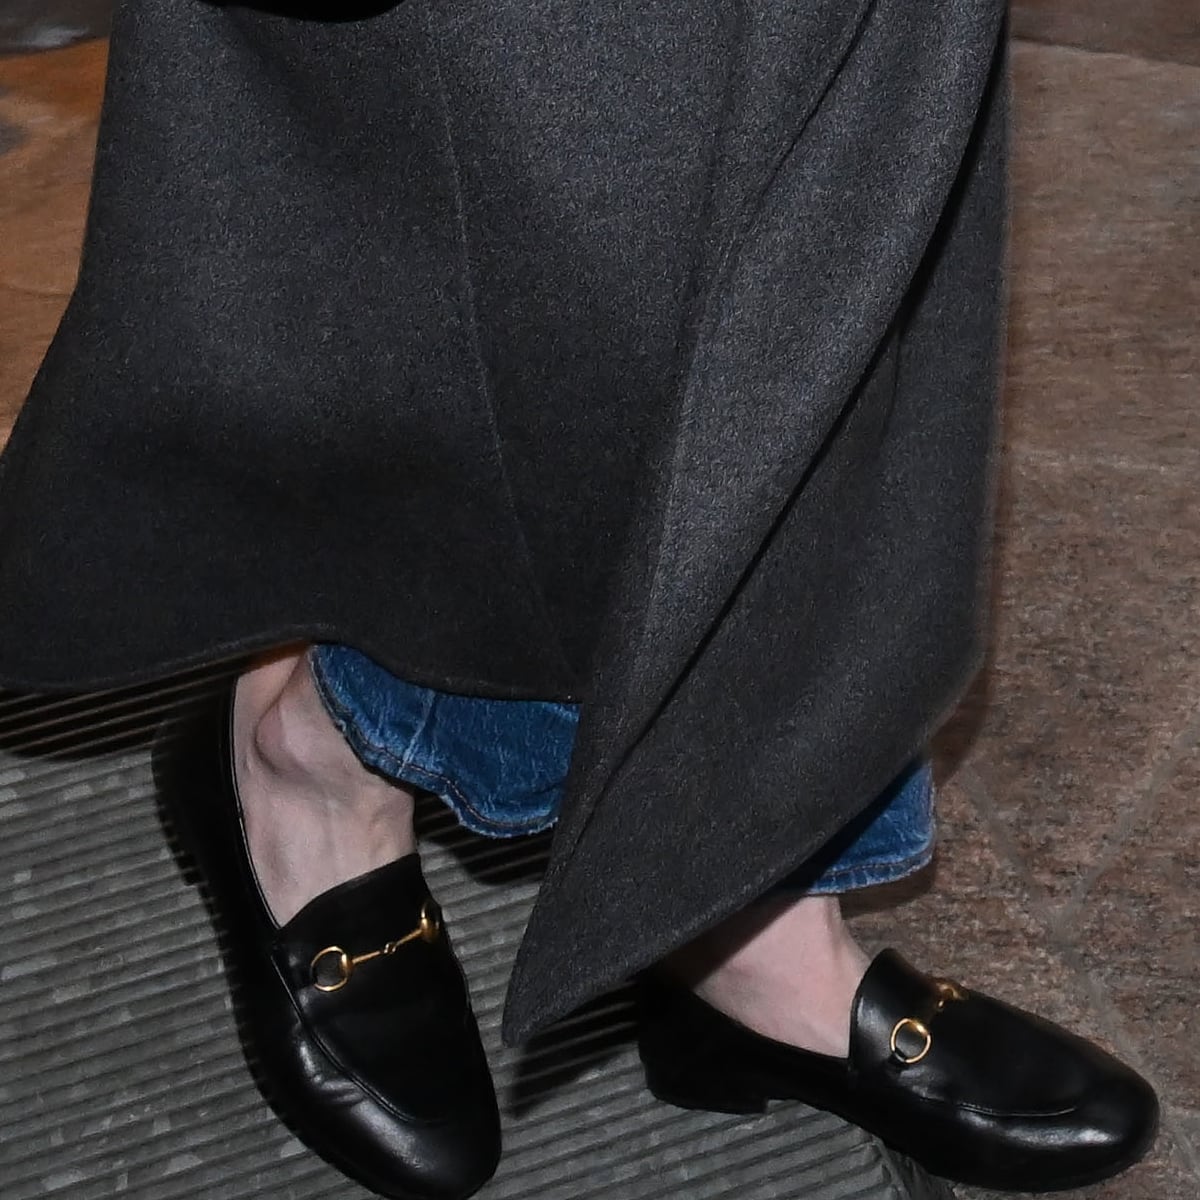 Kirsten Dunst wears black Gucci Jordaan loafers featuring the iconic Horsebit detail